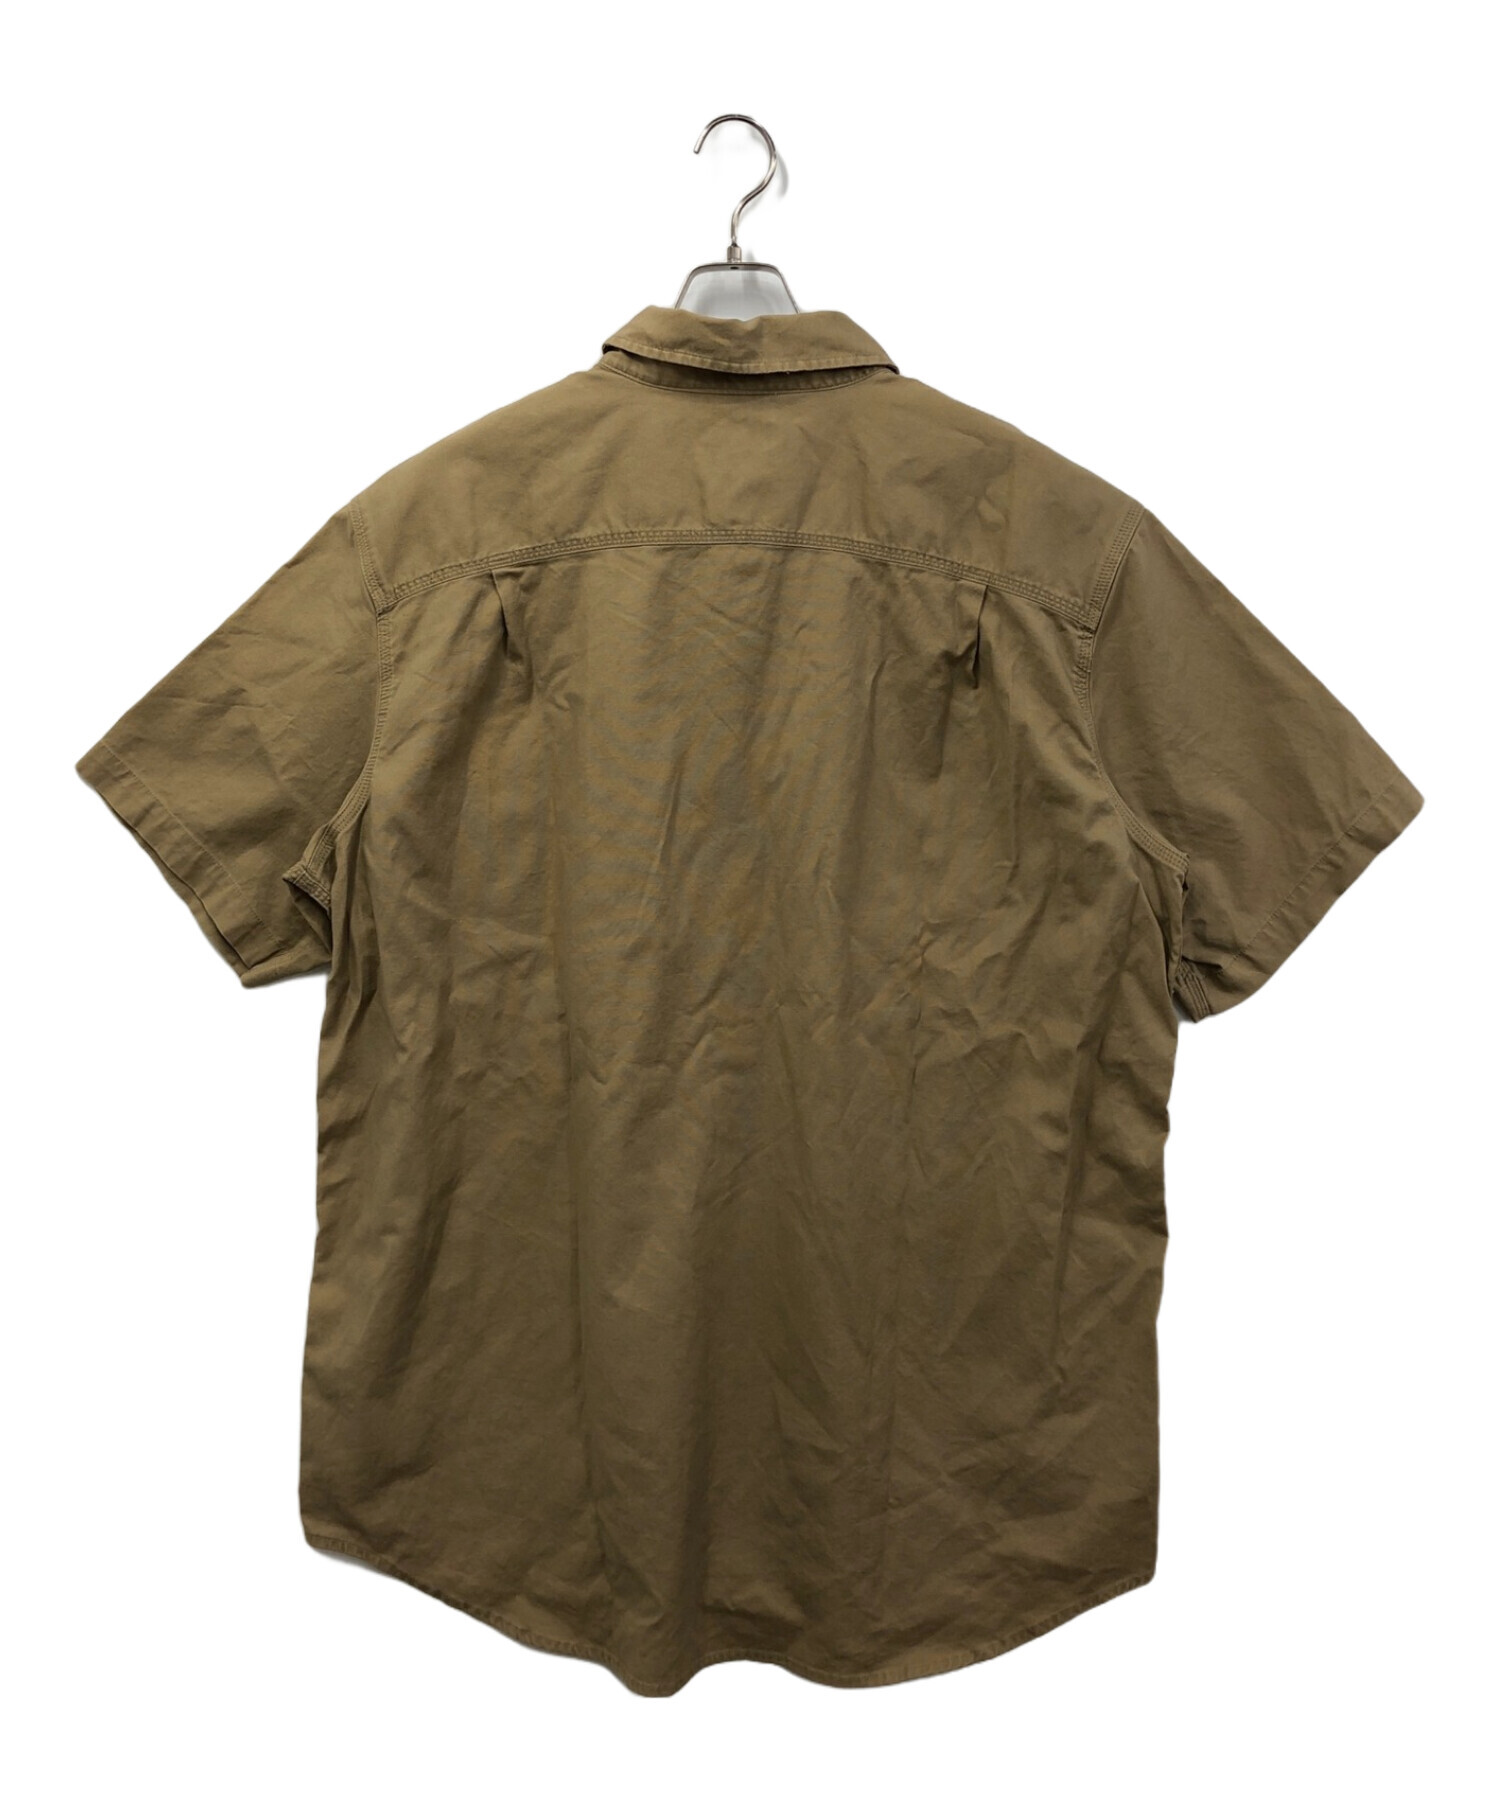 CarHartt (カーハート) オーバーサイズシャツ ブラウン サイズ:2XL